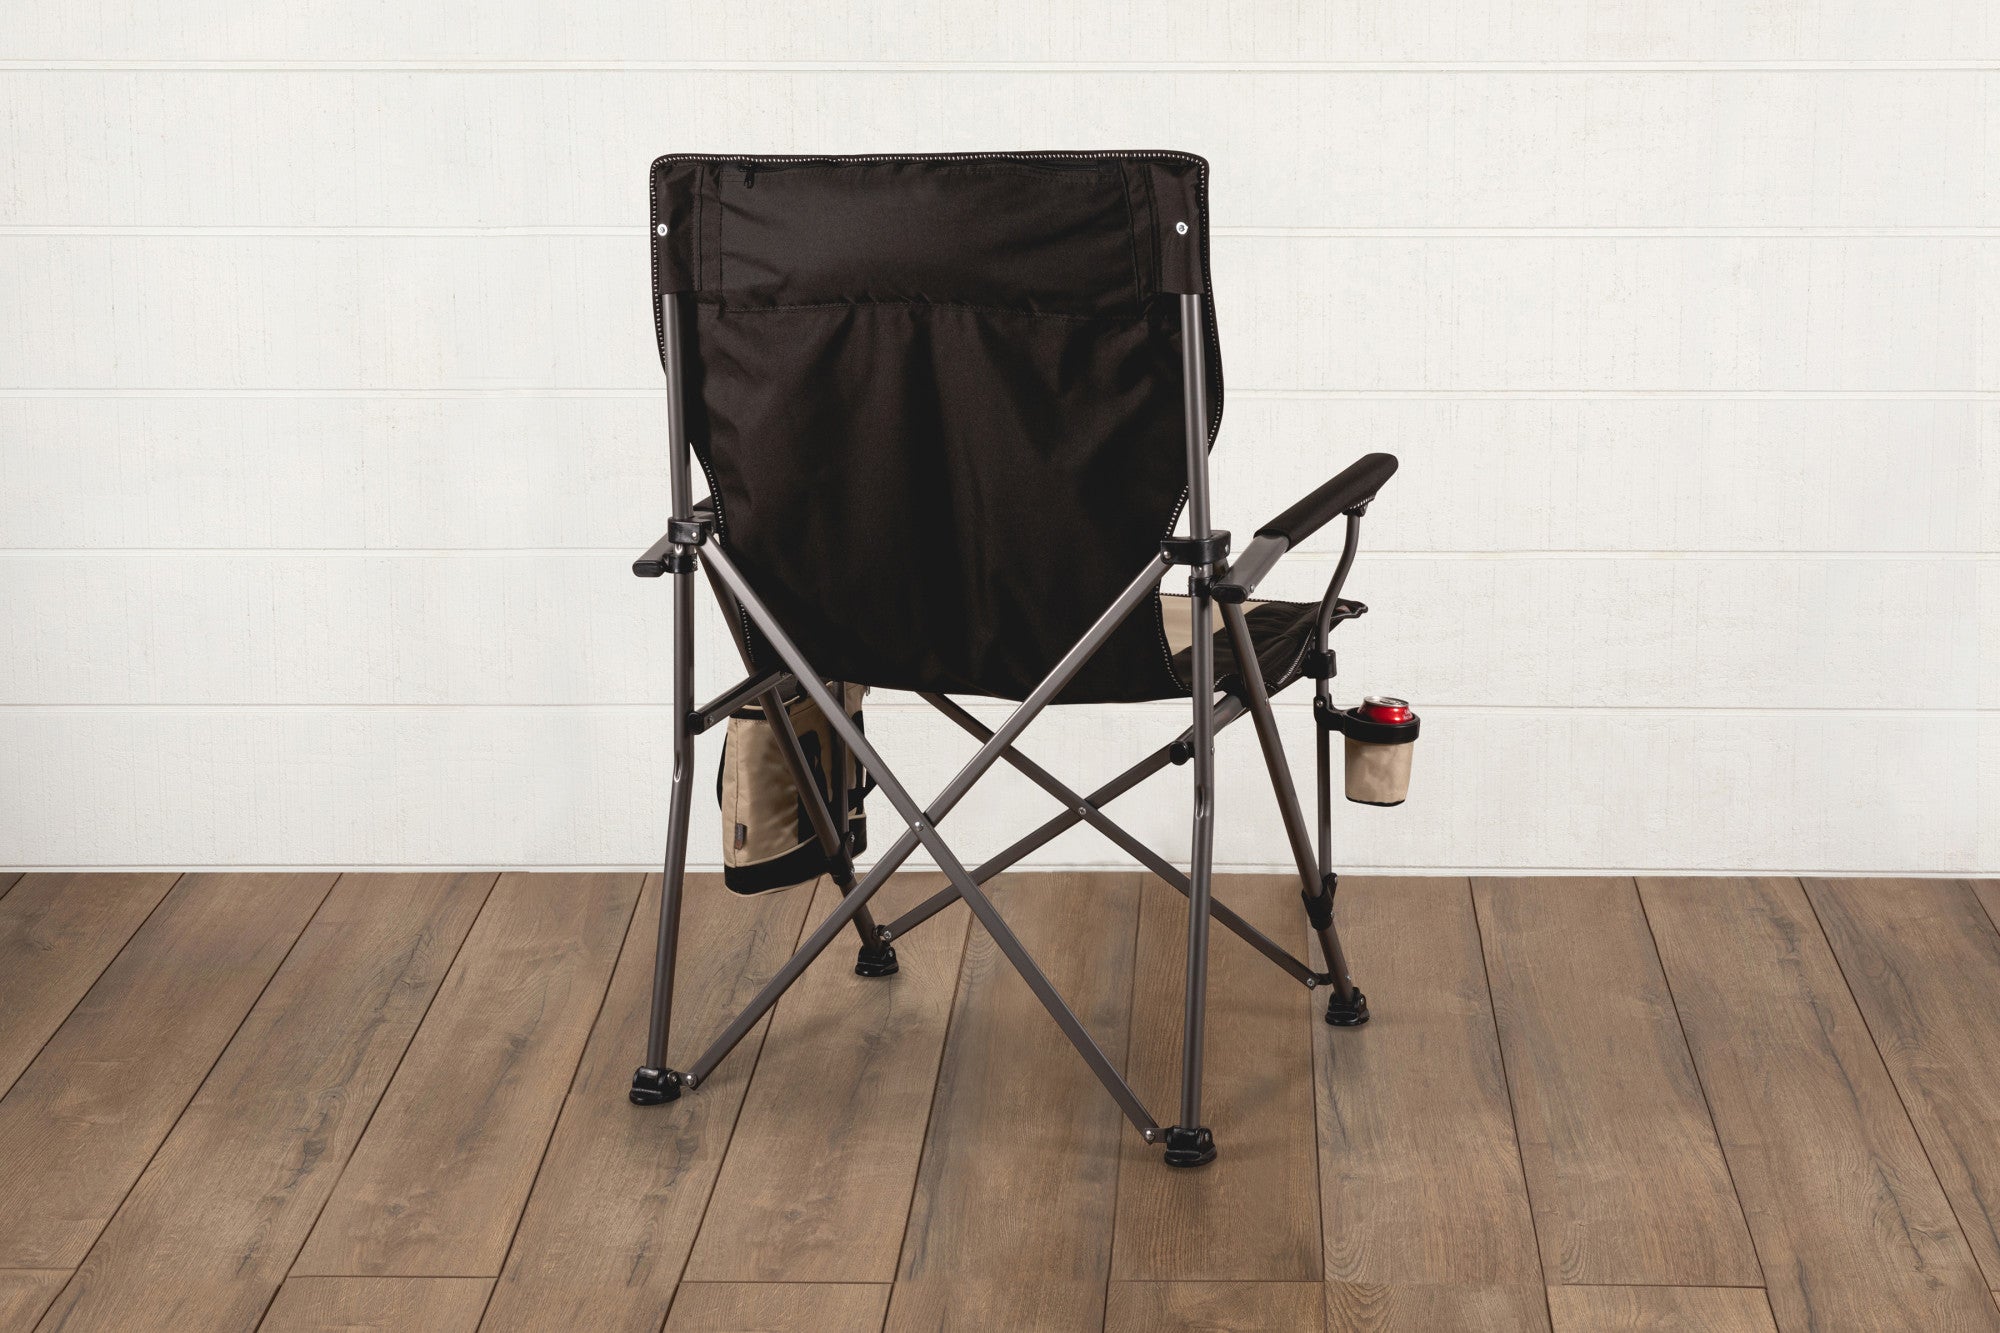 Buffalo Bills - Big Bear XXL Camping Chair with Cooler